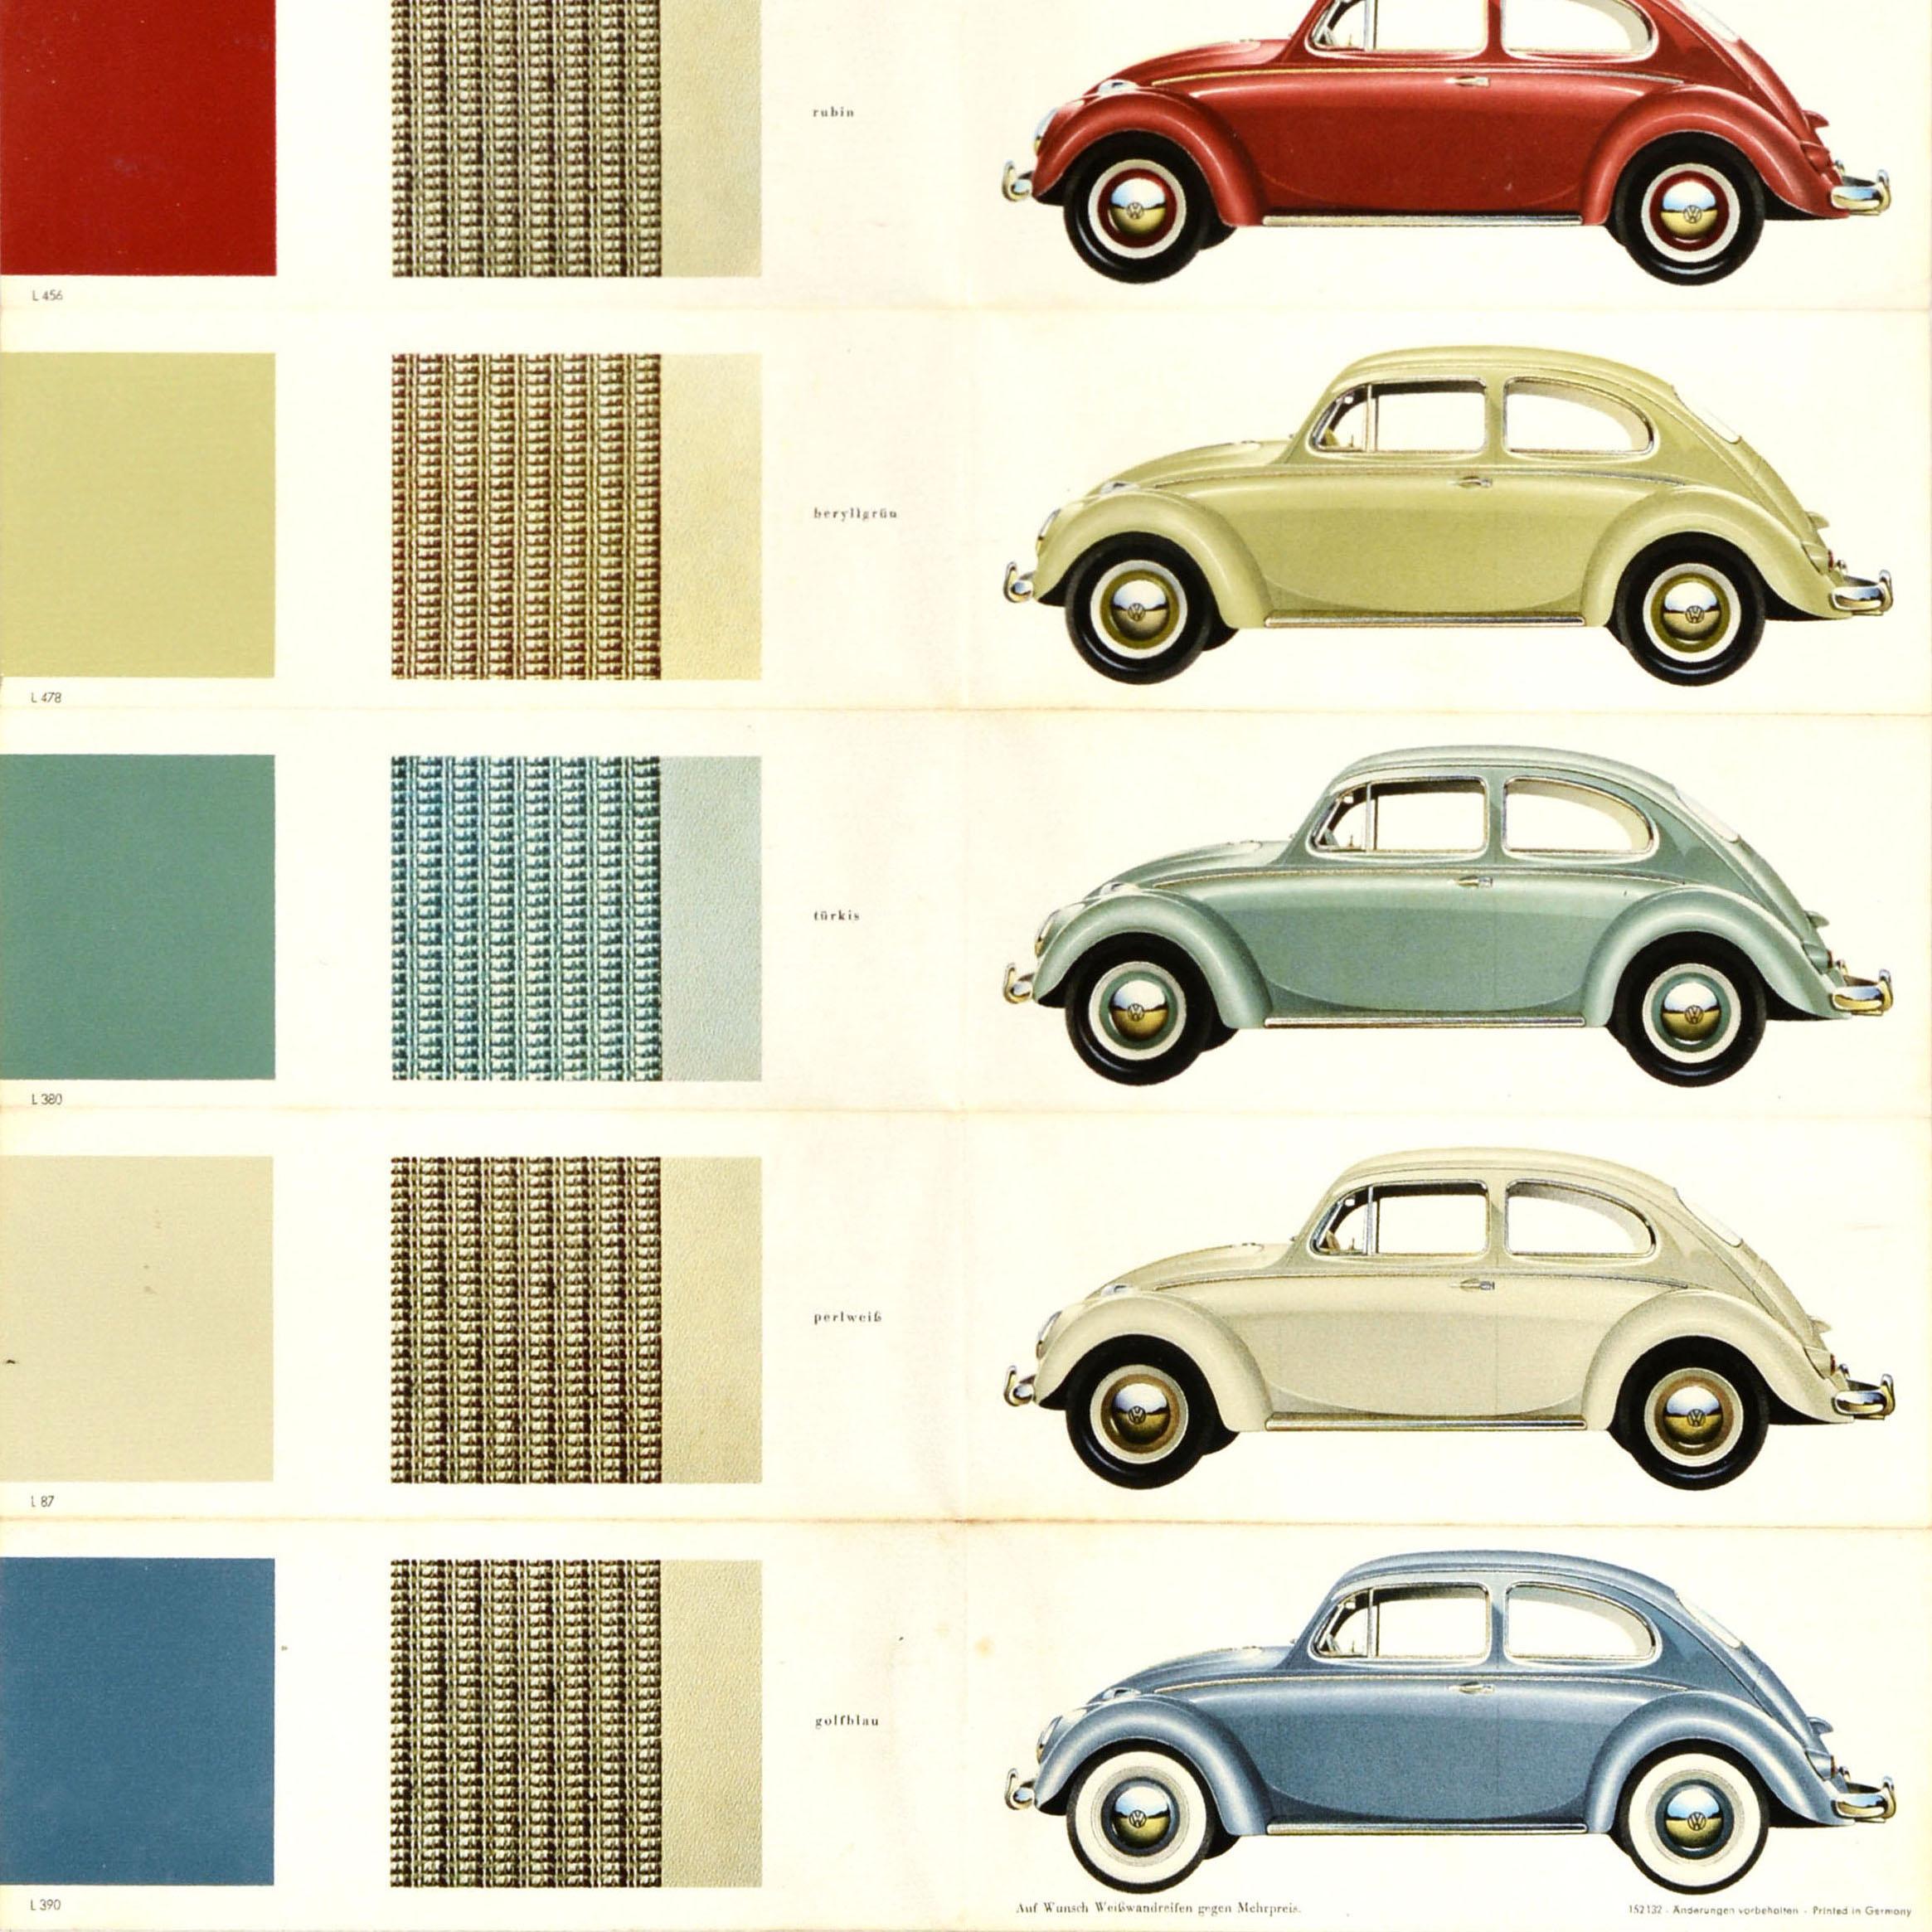 German Original Vintage Car Advertising Poster Volkswagen Limousine VW Automobile Retro For Sale